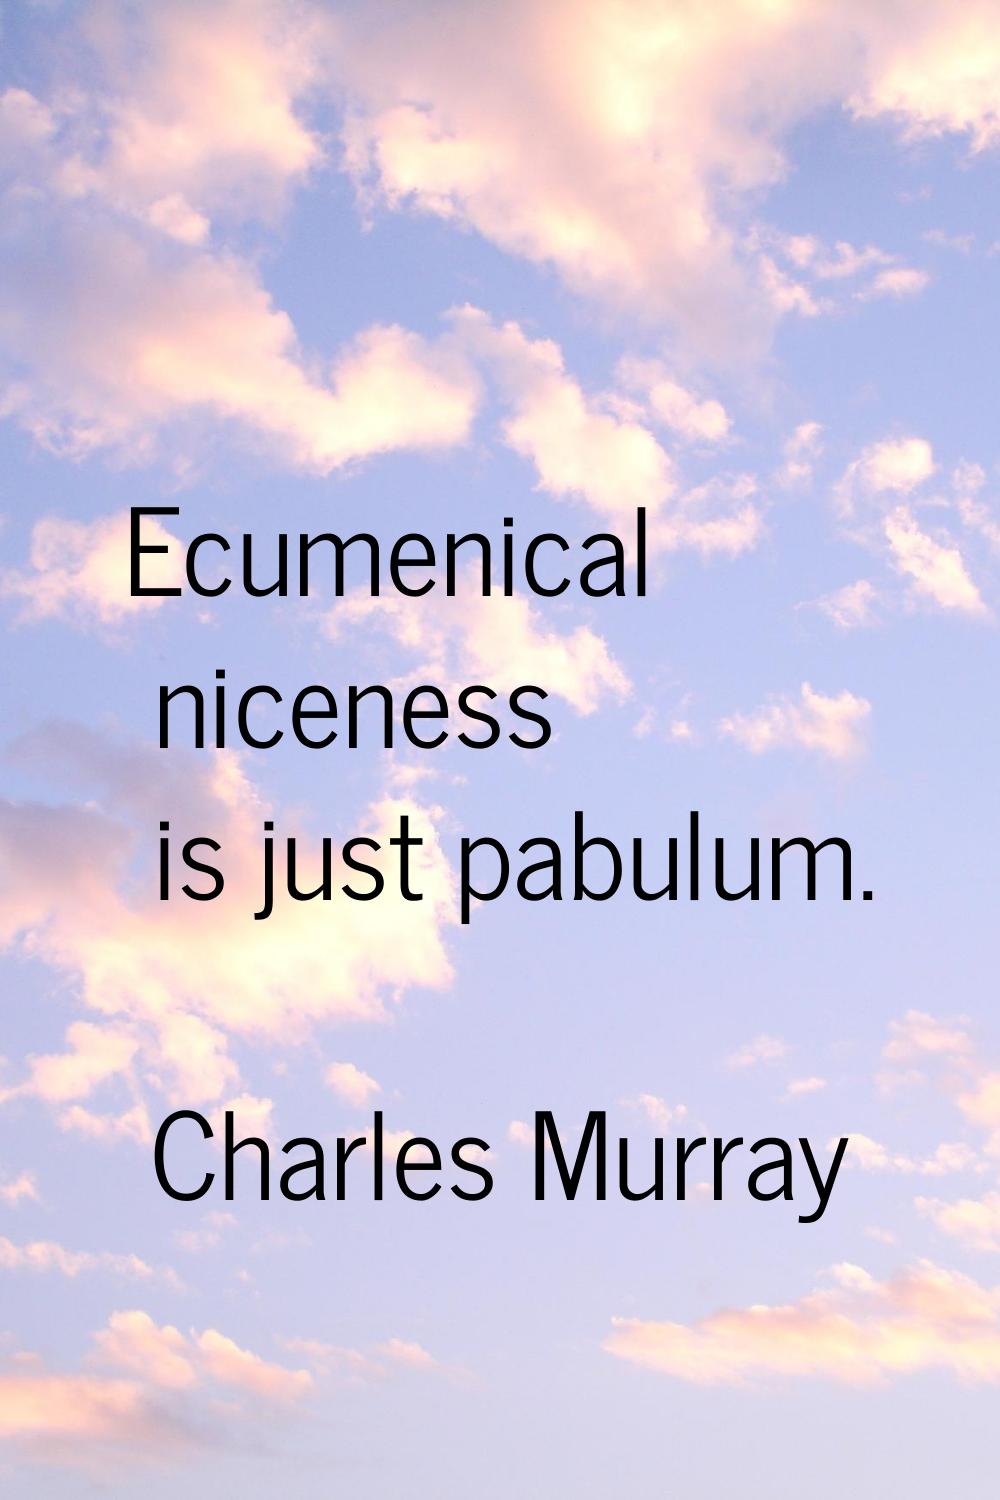 Ecumenical niceness is just pabulum.